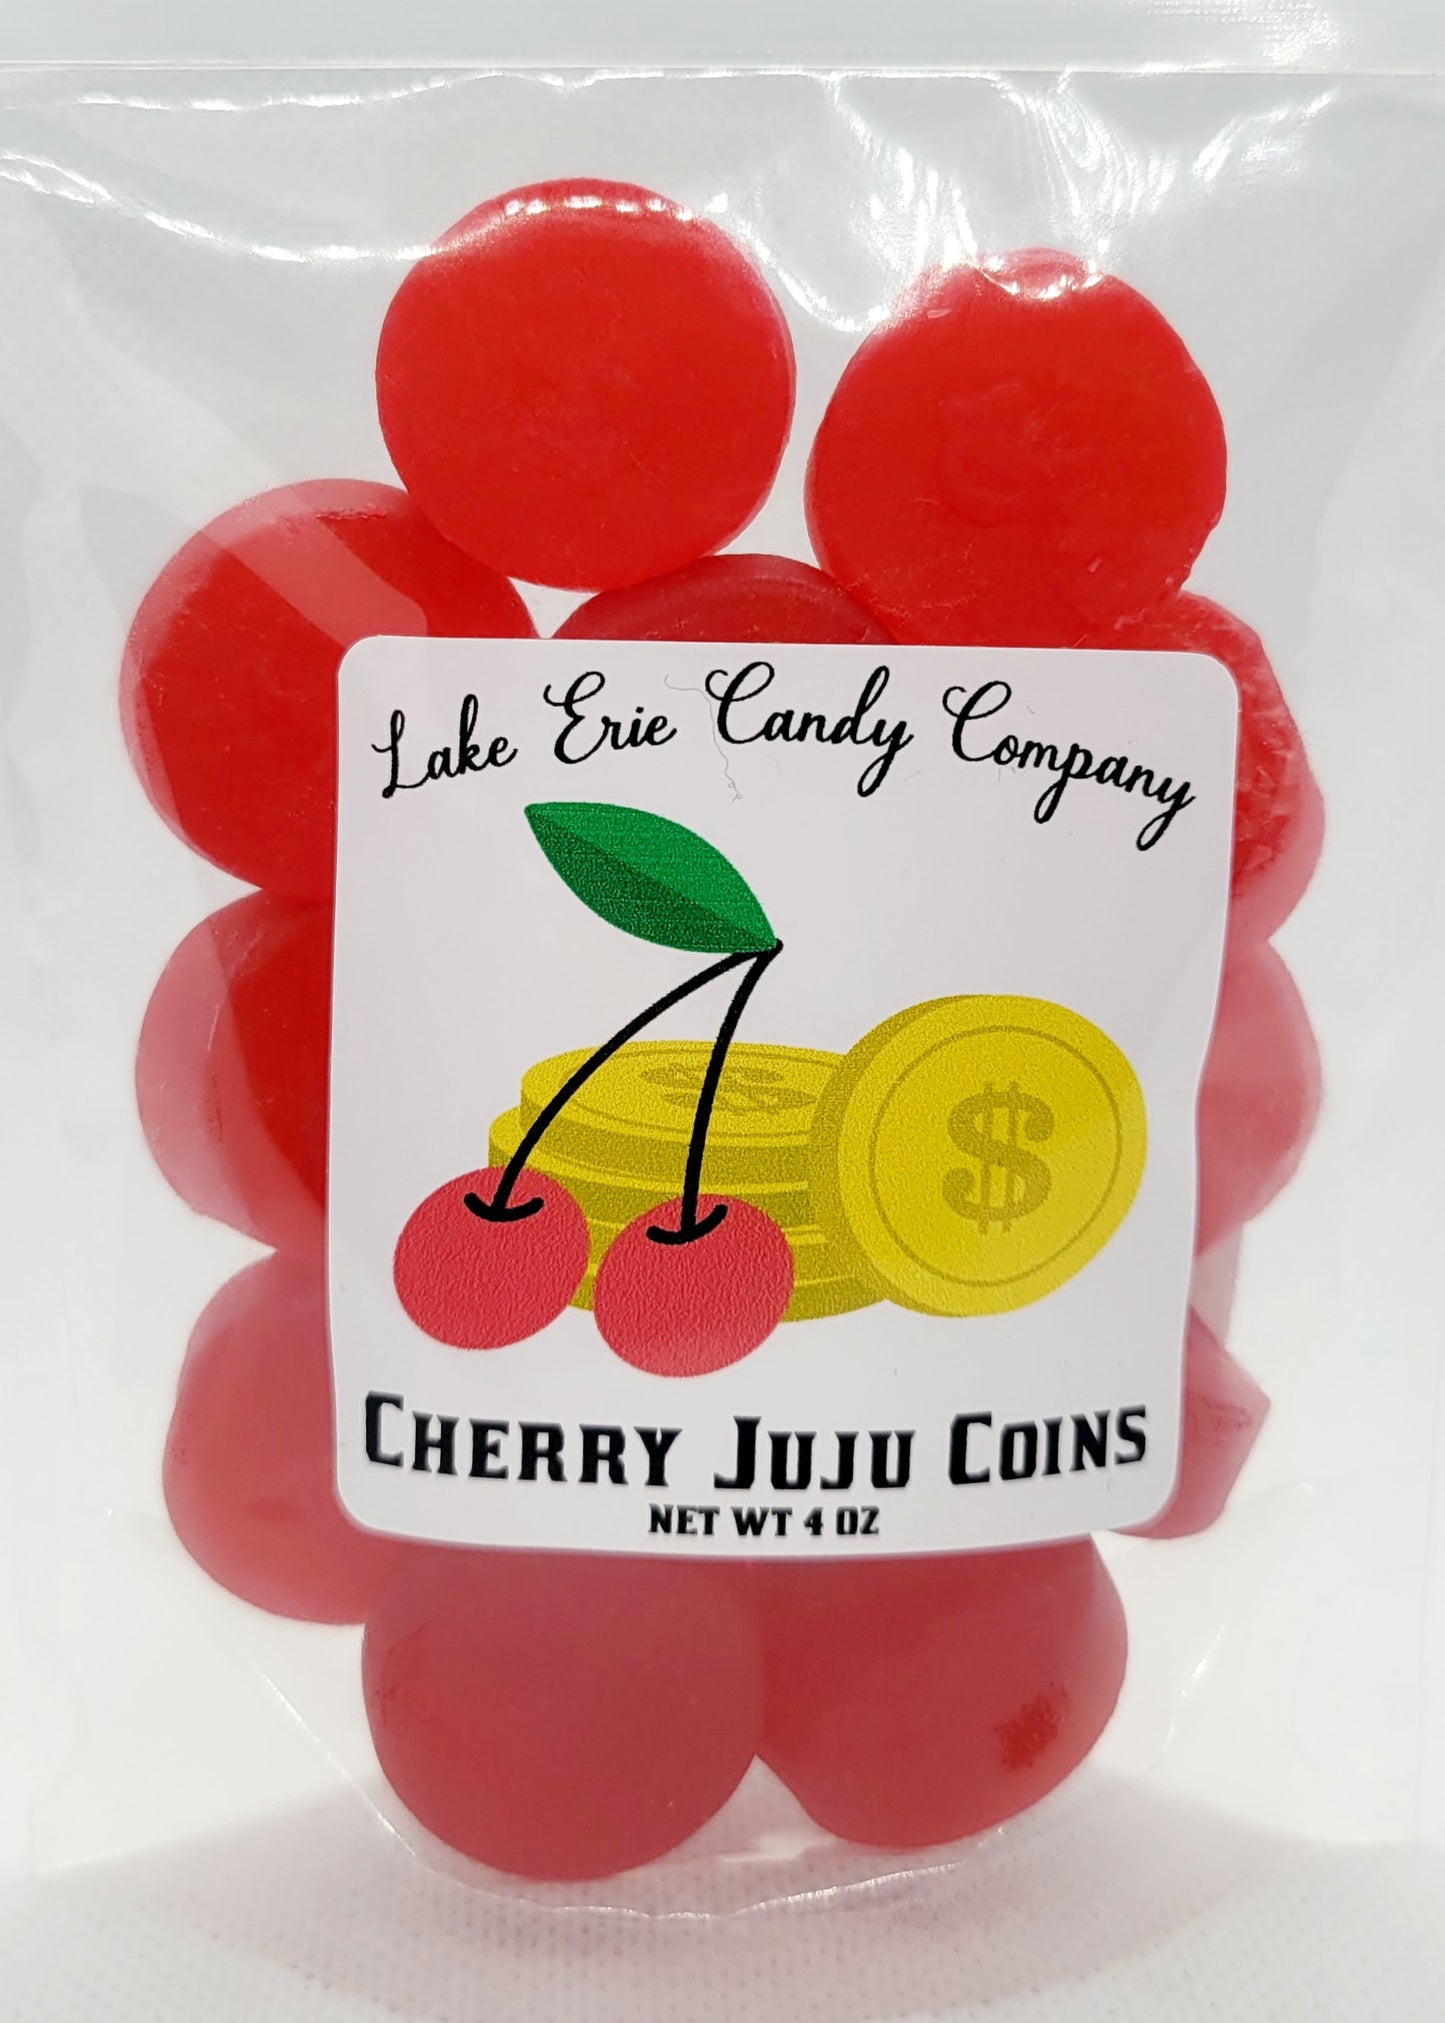 Cherry Juju Coins